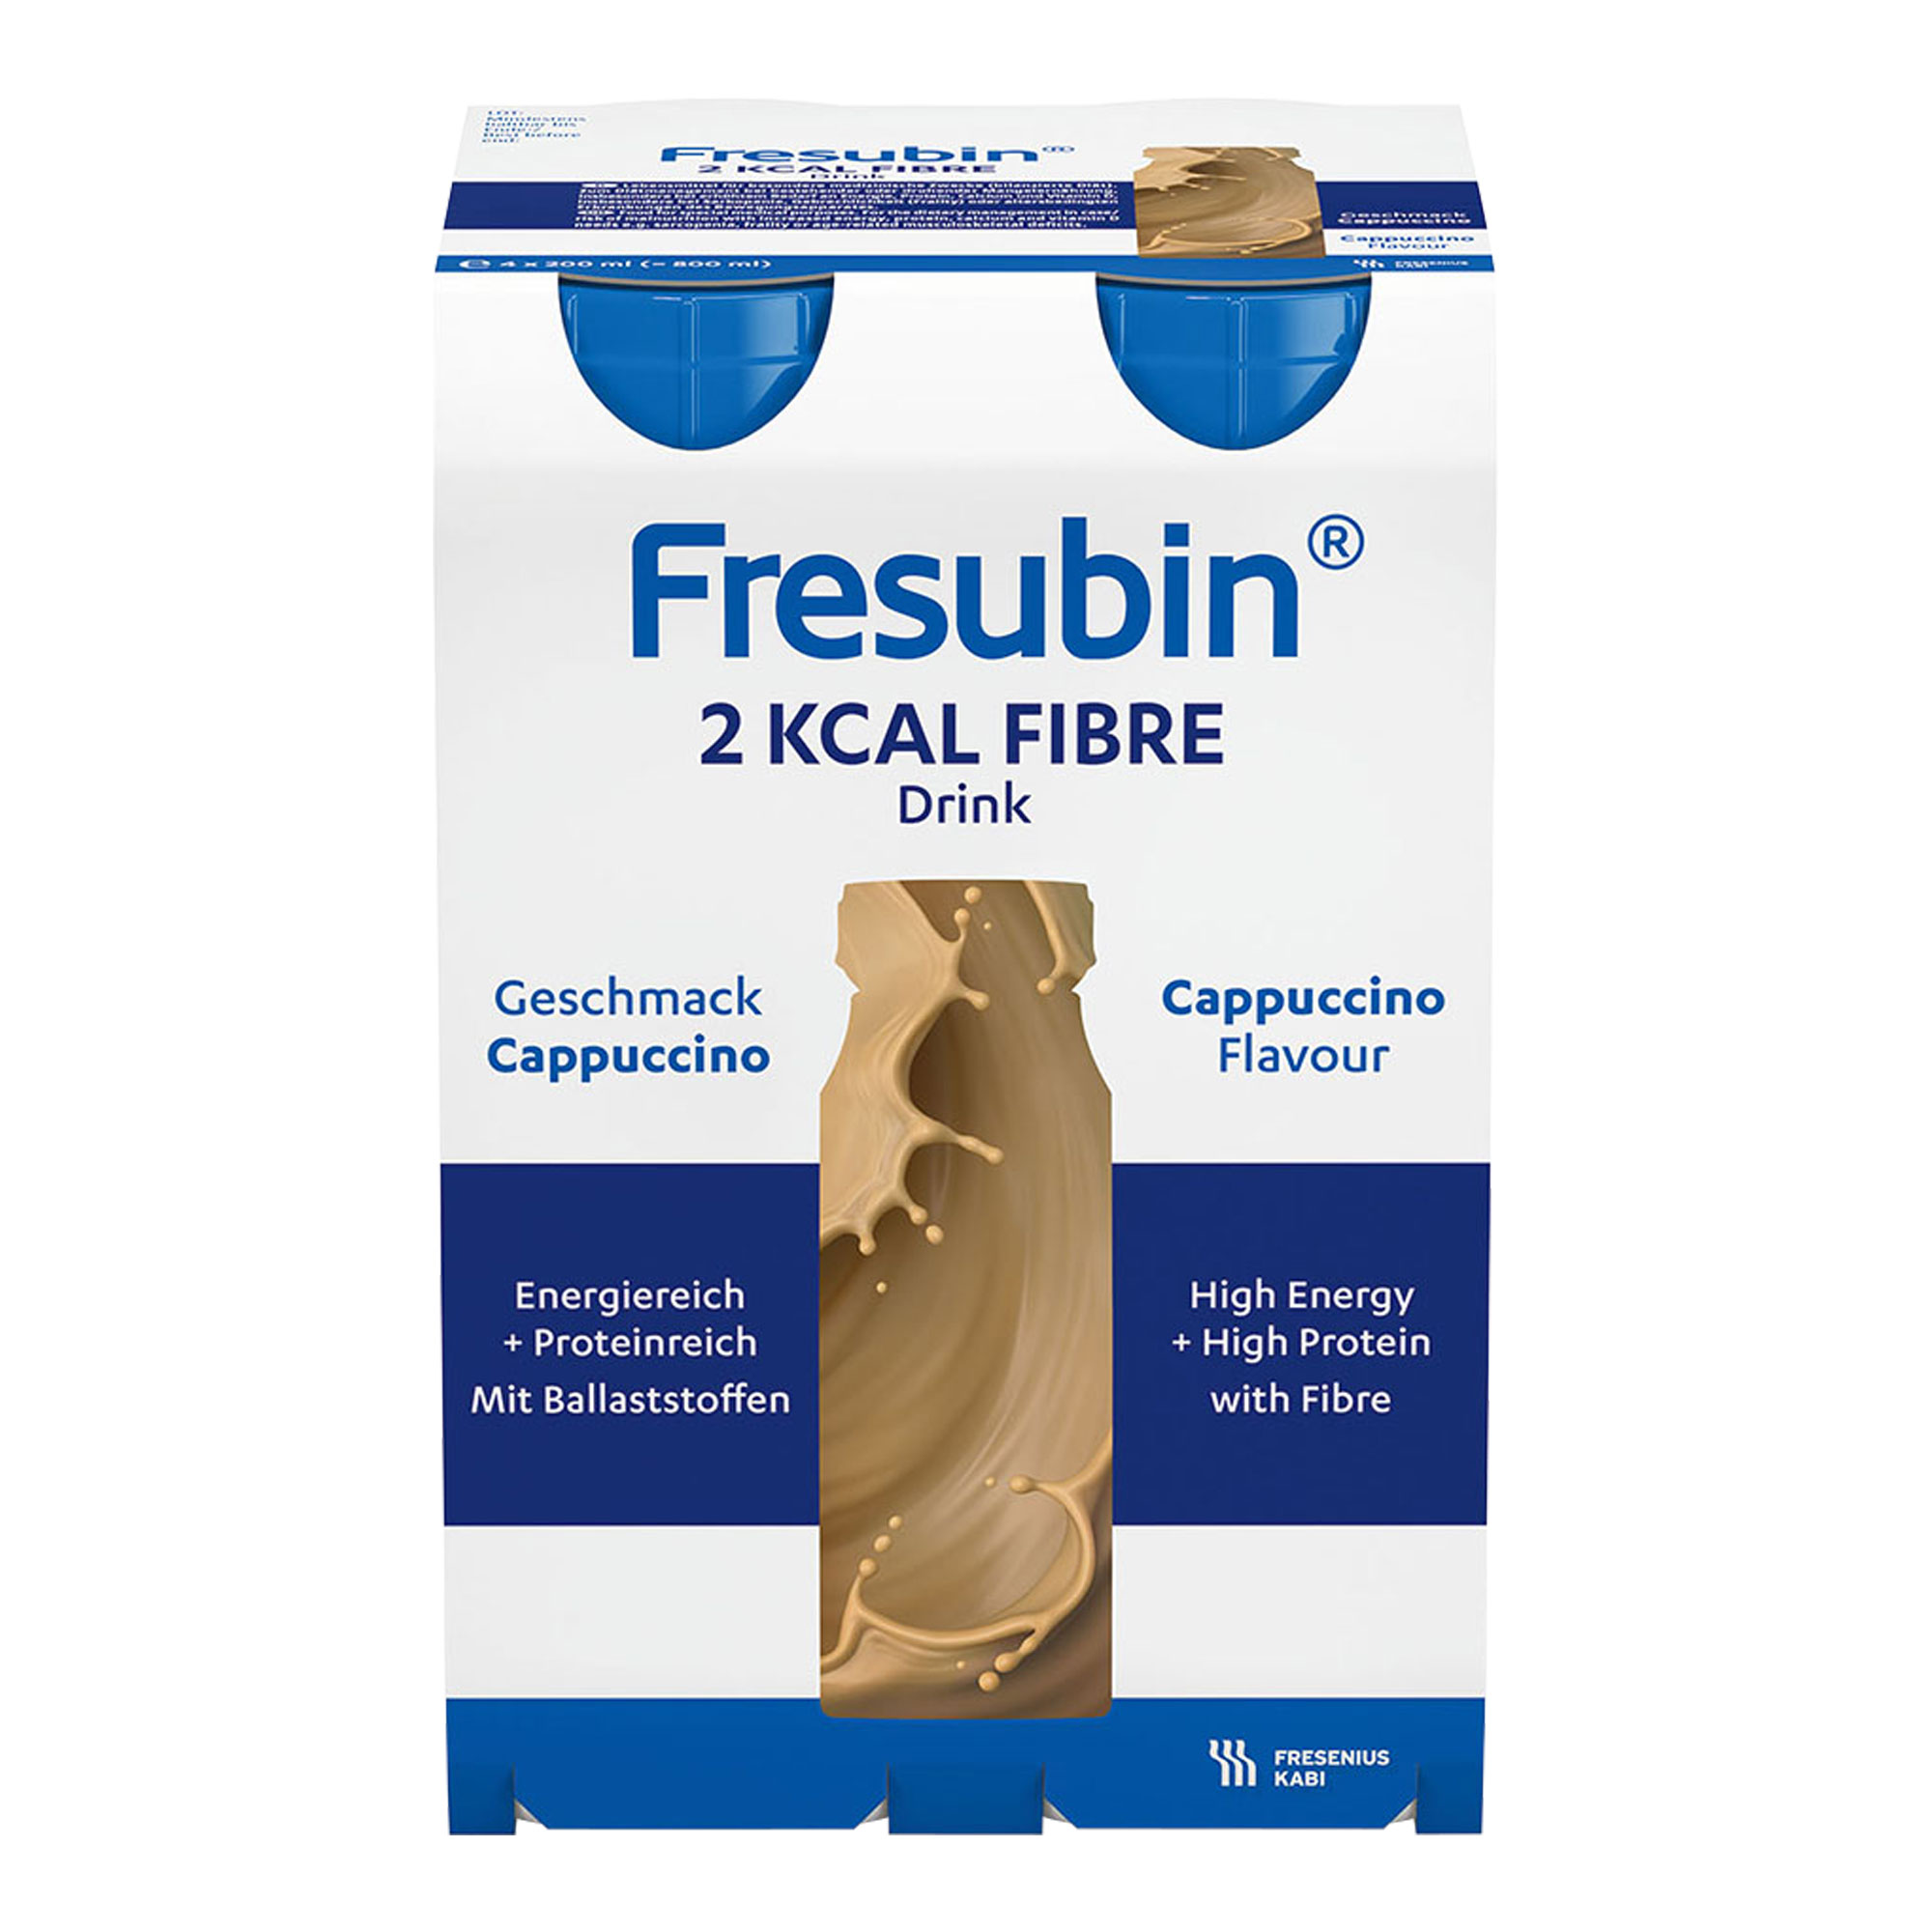 Fresubin 2 kcal fibre DRINK Cappuccino